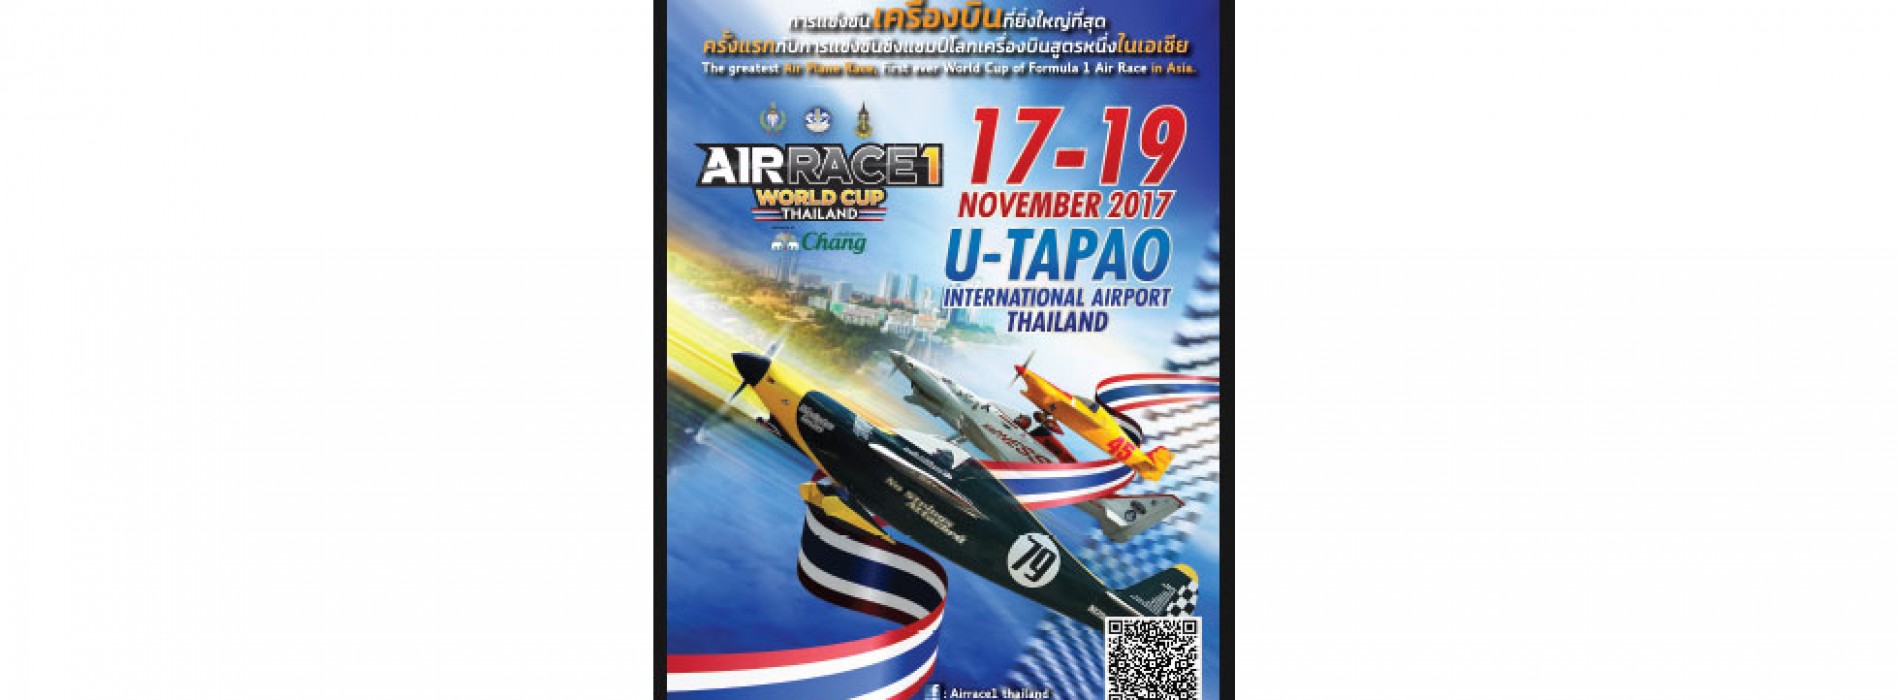 Thailand revs up Air Race 1 World Cup Thailand 2017